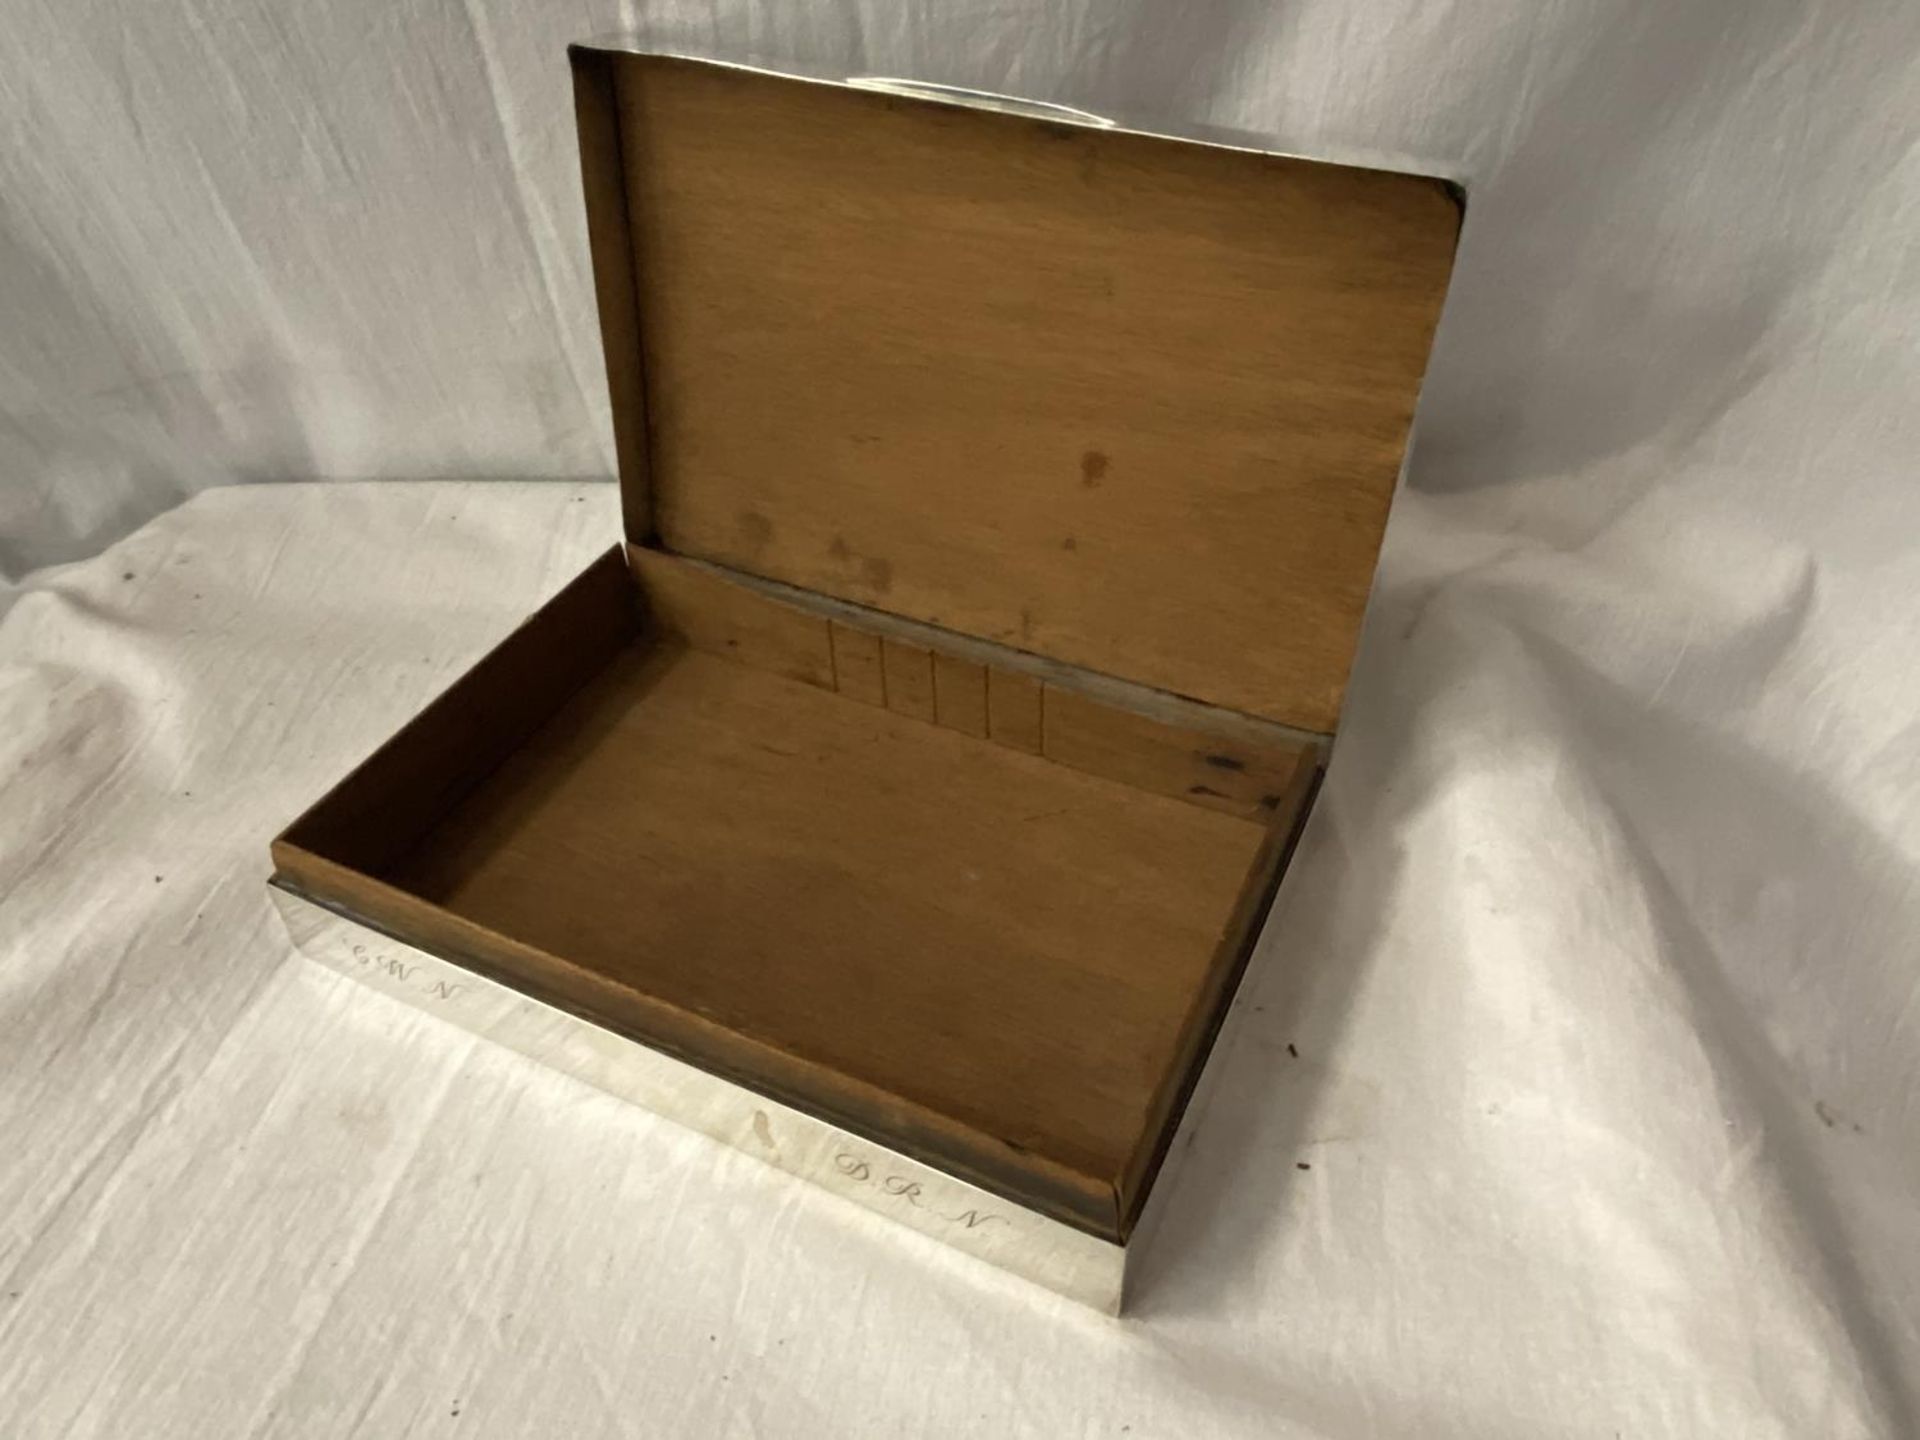 A BIRMINGHAM SILVER CIGARETTE BOX 23CM X 15CM X 5CM (WEIGHT 1000G) - Image 4 of 6